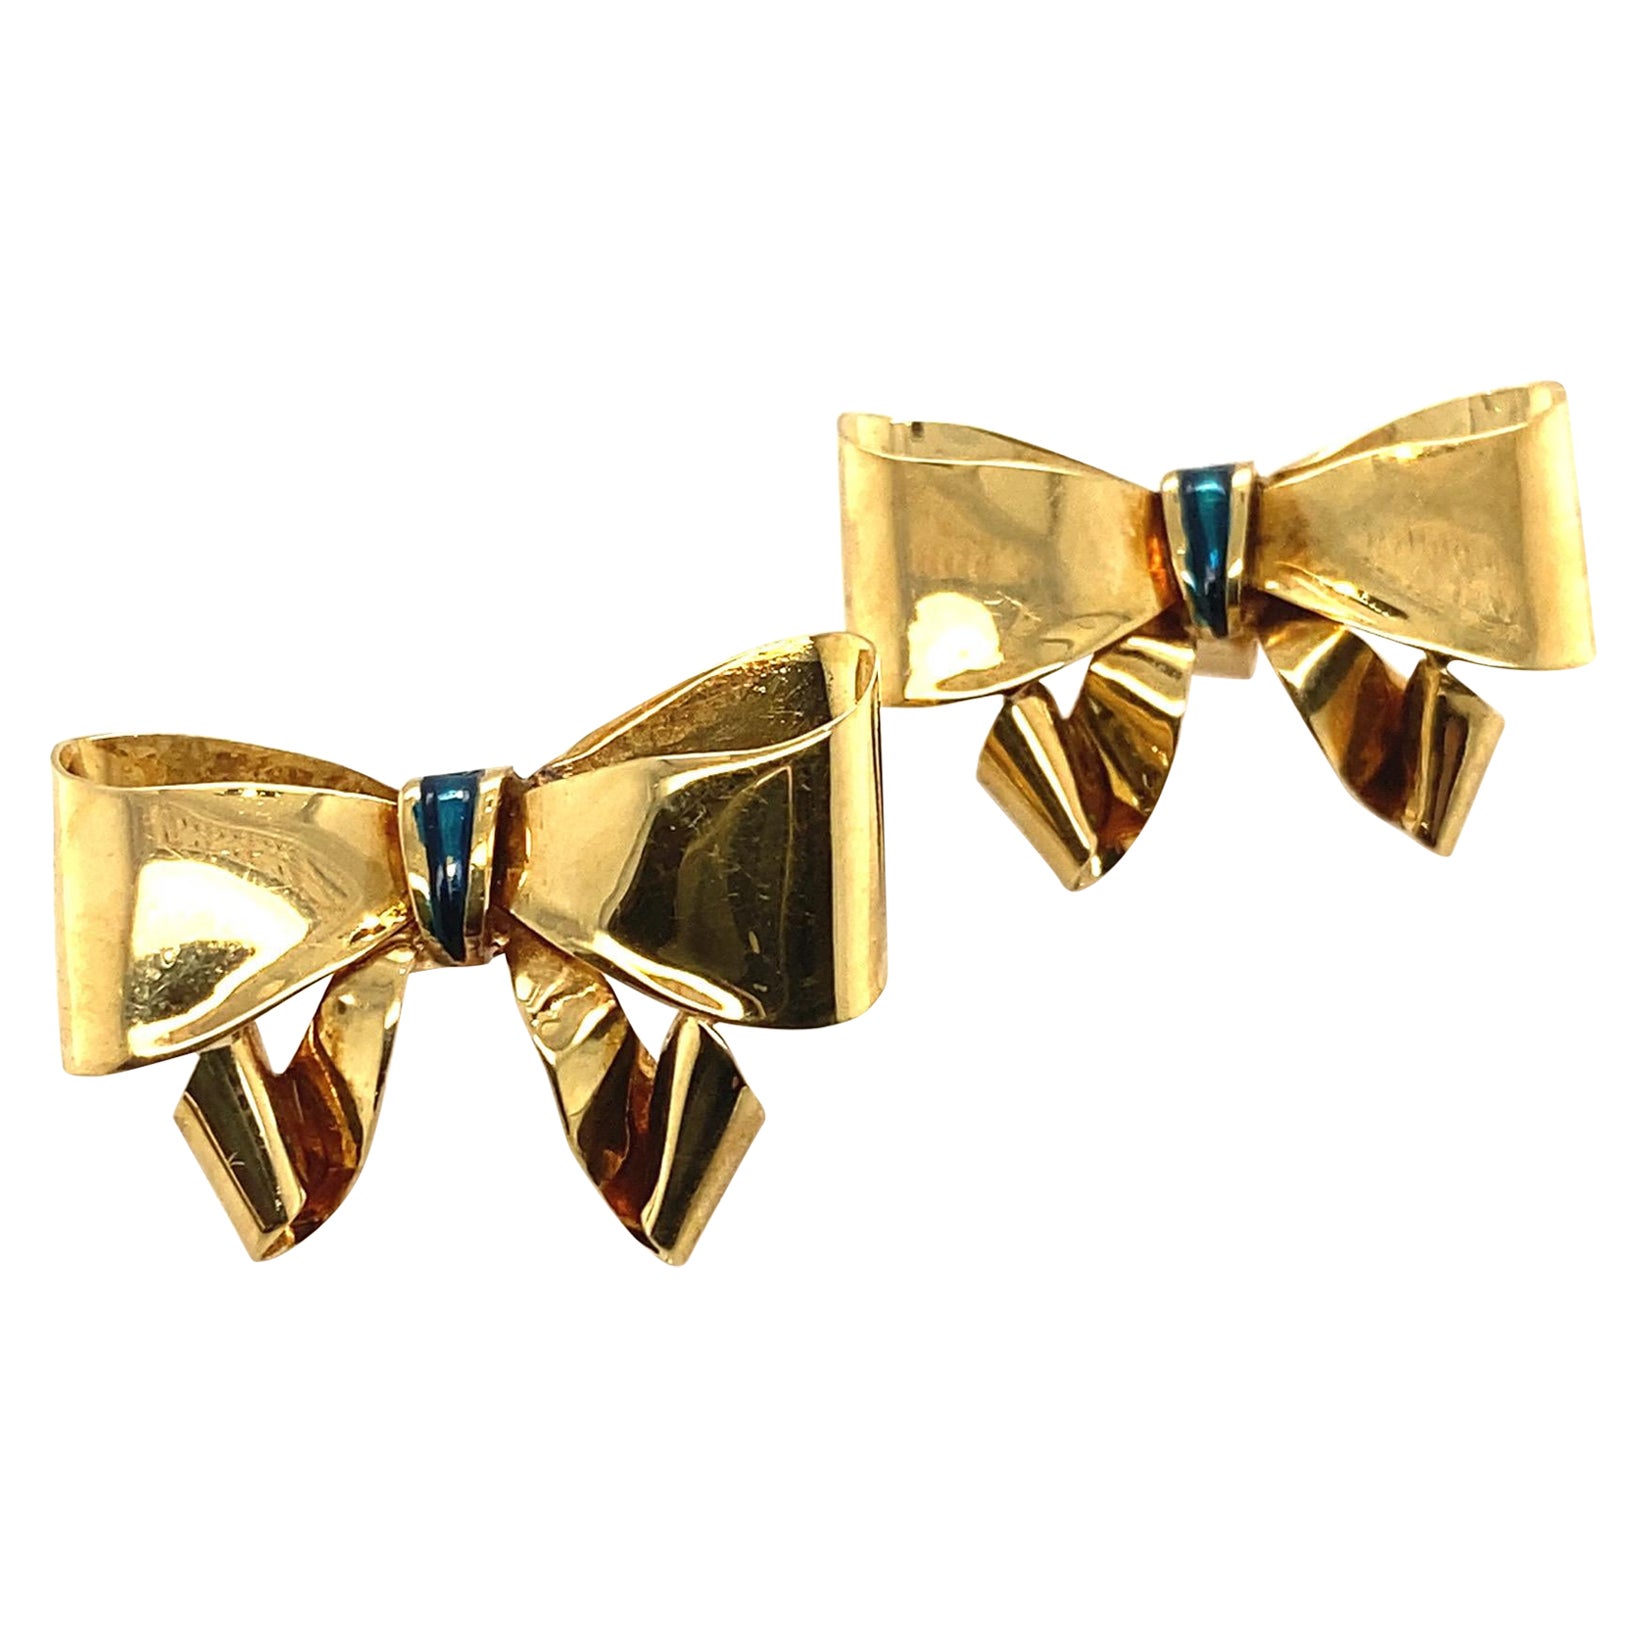 Vintage La Nouvelle Bagues 18 Karat Yellow Gold Bow Earrings with Green Enamel